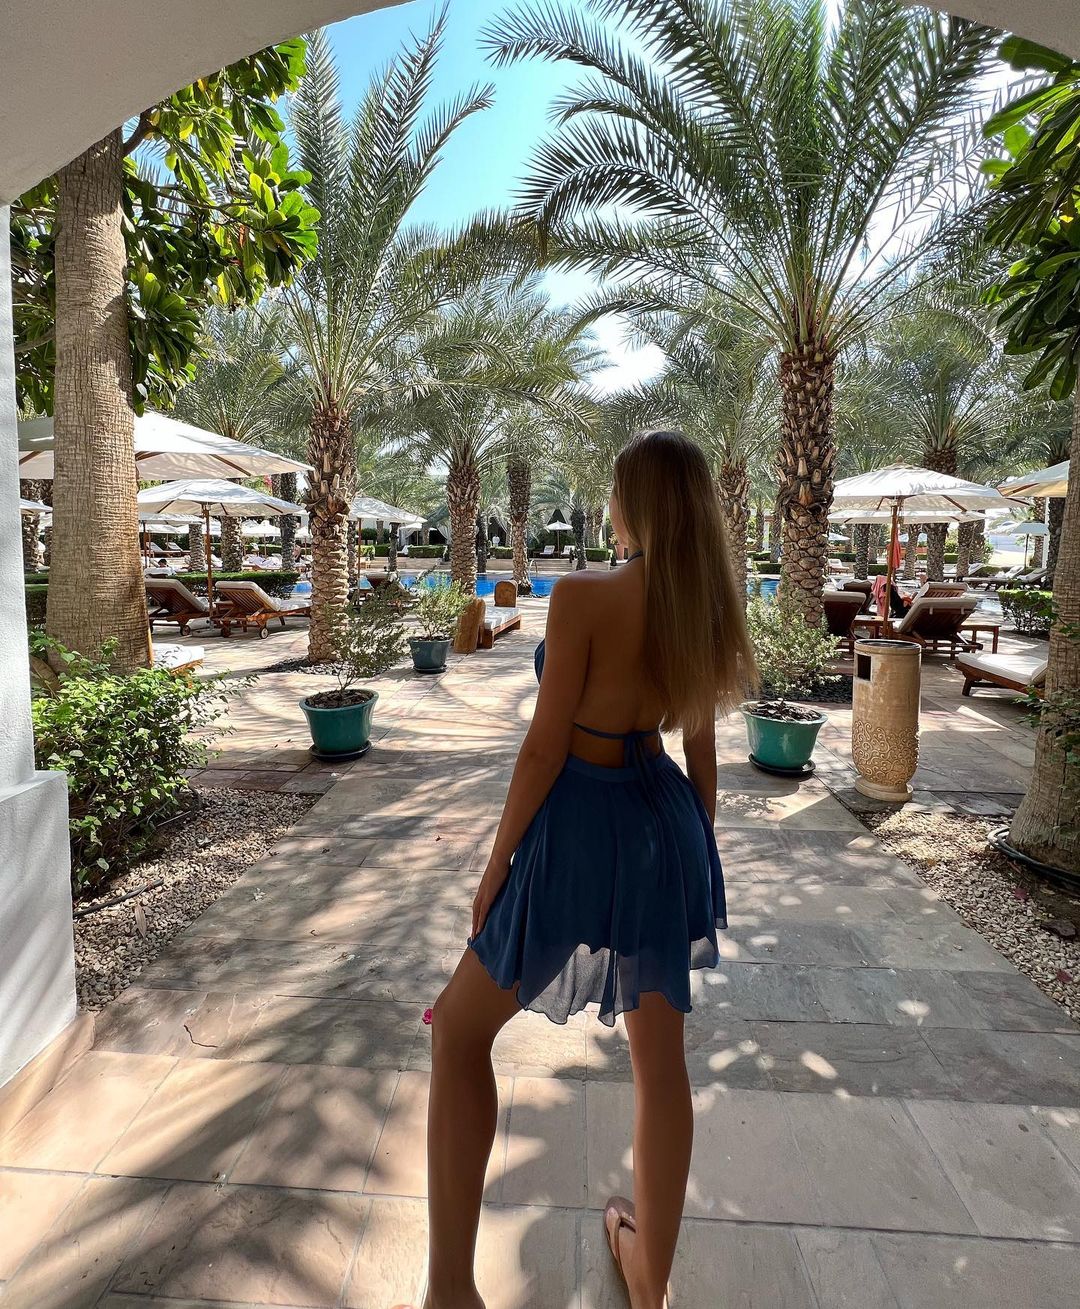 Kliff Kingsbury’s Hot Girlfriend Veronica Bielik in Dubai!